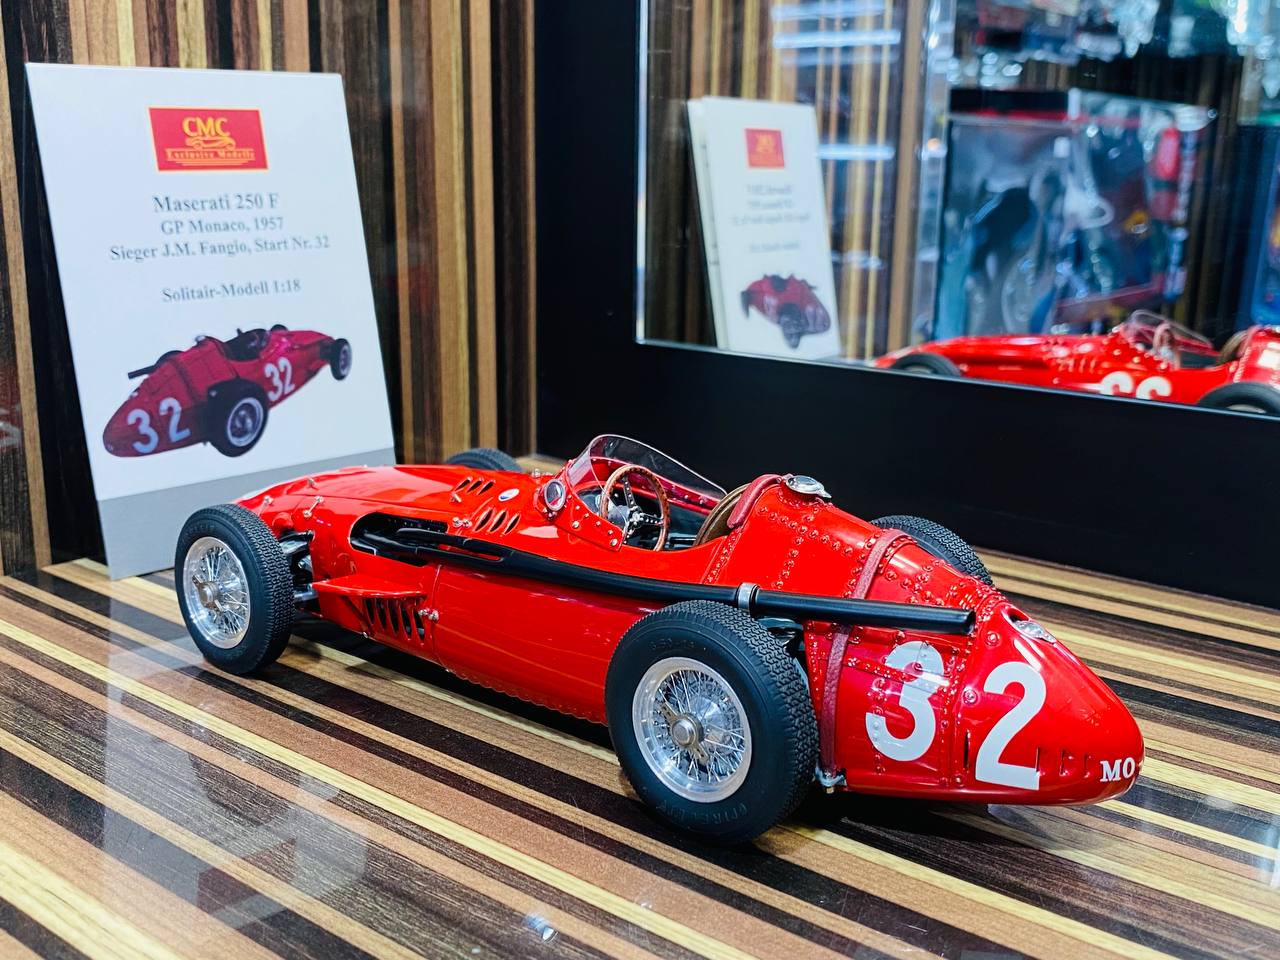 CMC Maserati 250 F GP Monaco, 1957 Sieger J.M Fangio, Start Nr. 32 [1/18 Red Diecast]